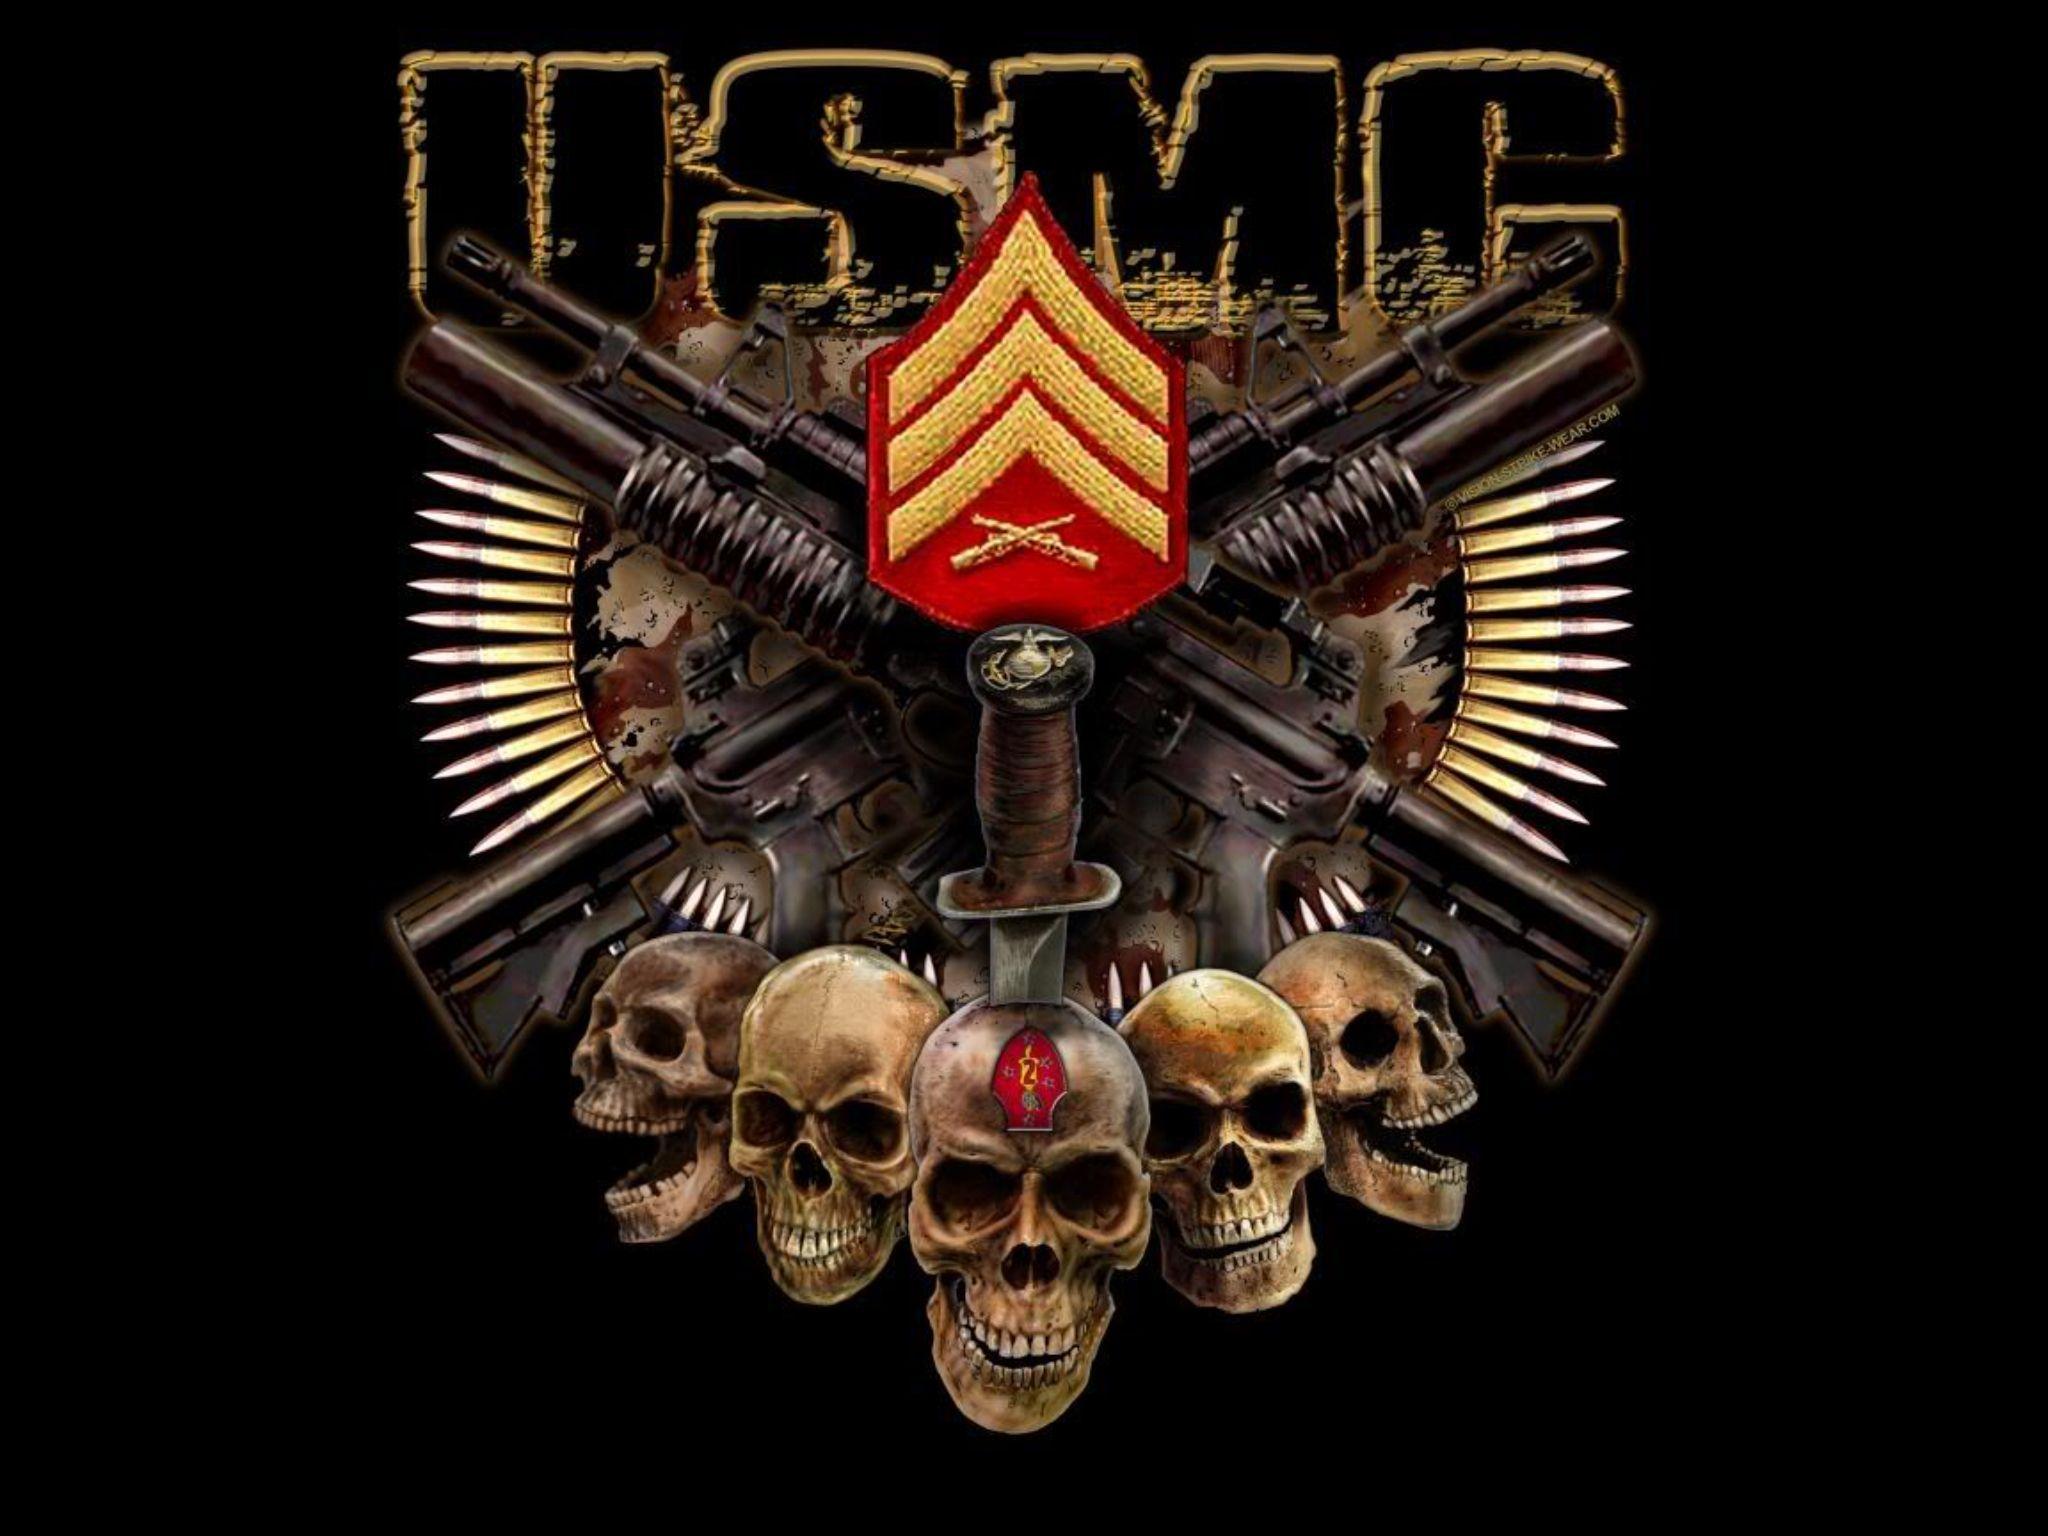 Awesome USMC wallpaper. Marine corps shirts, Usmc ranks